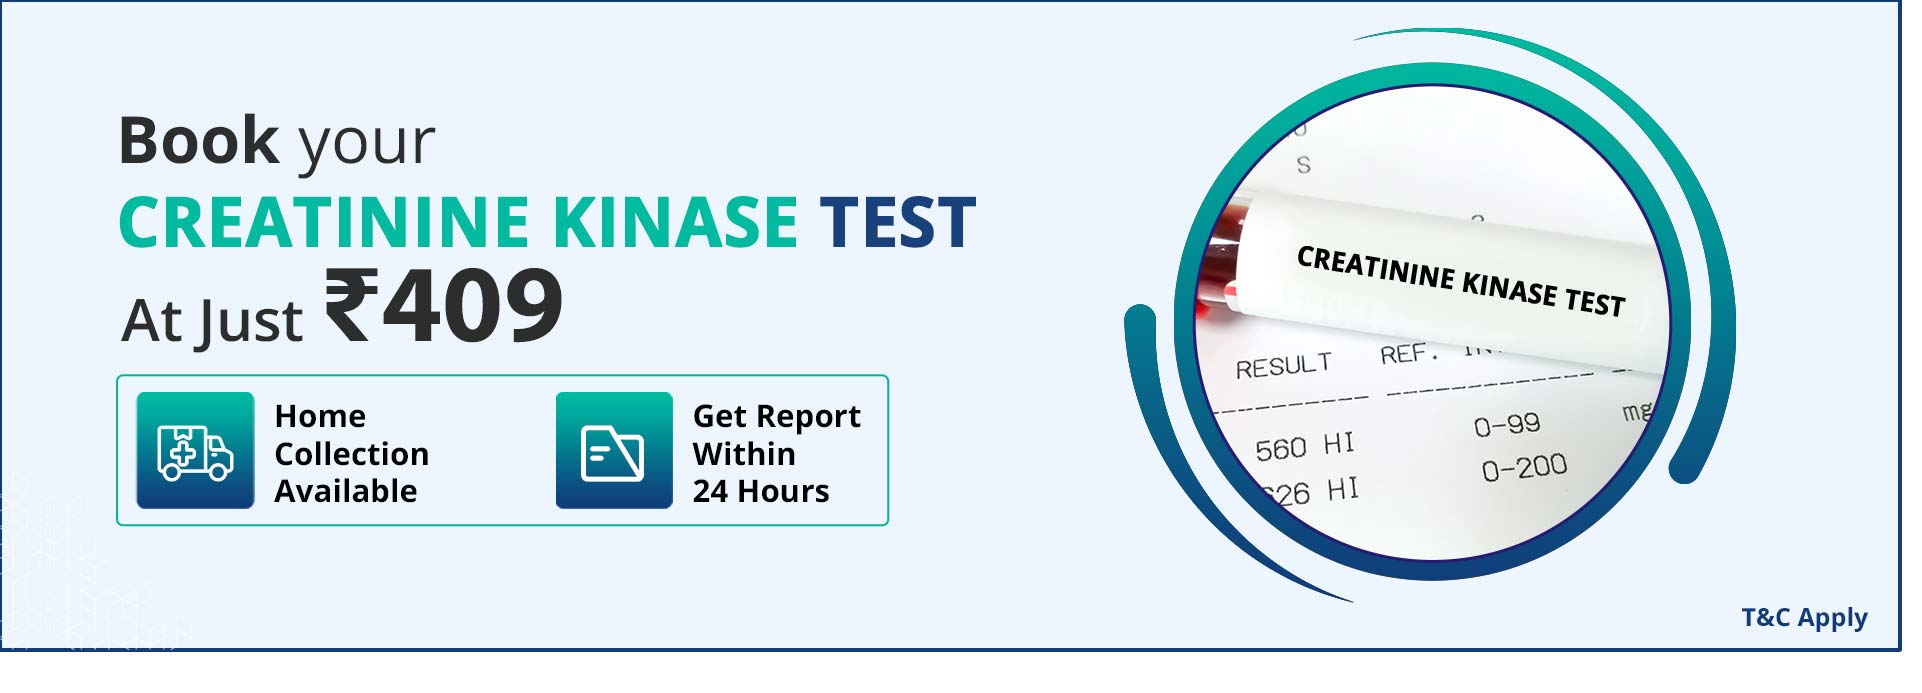 Creatinine kinase test